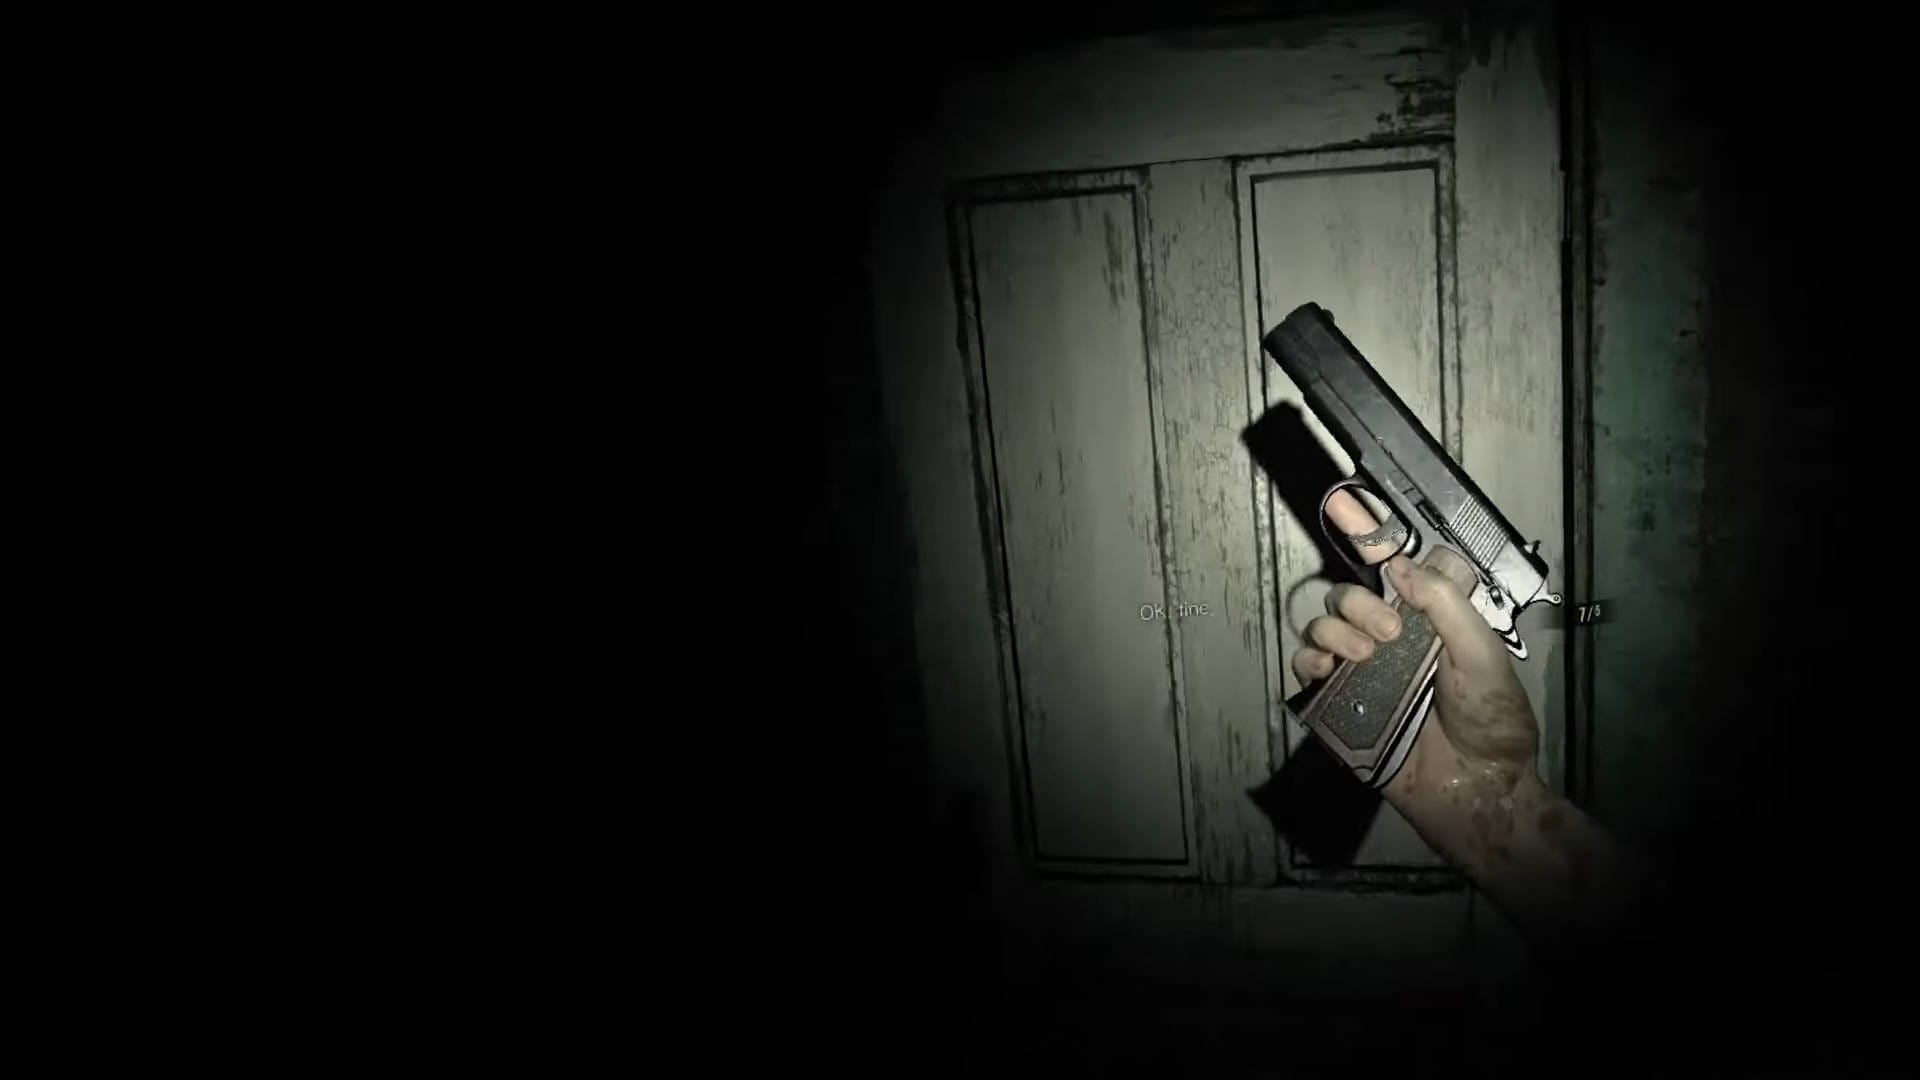 Incienso Debería Deflector This Resident Evil 7 VR Mod Looks Pretty Great | TechRaptor